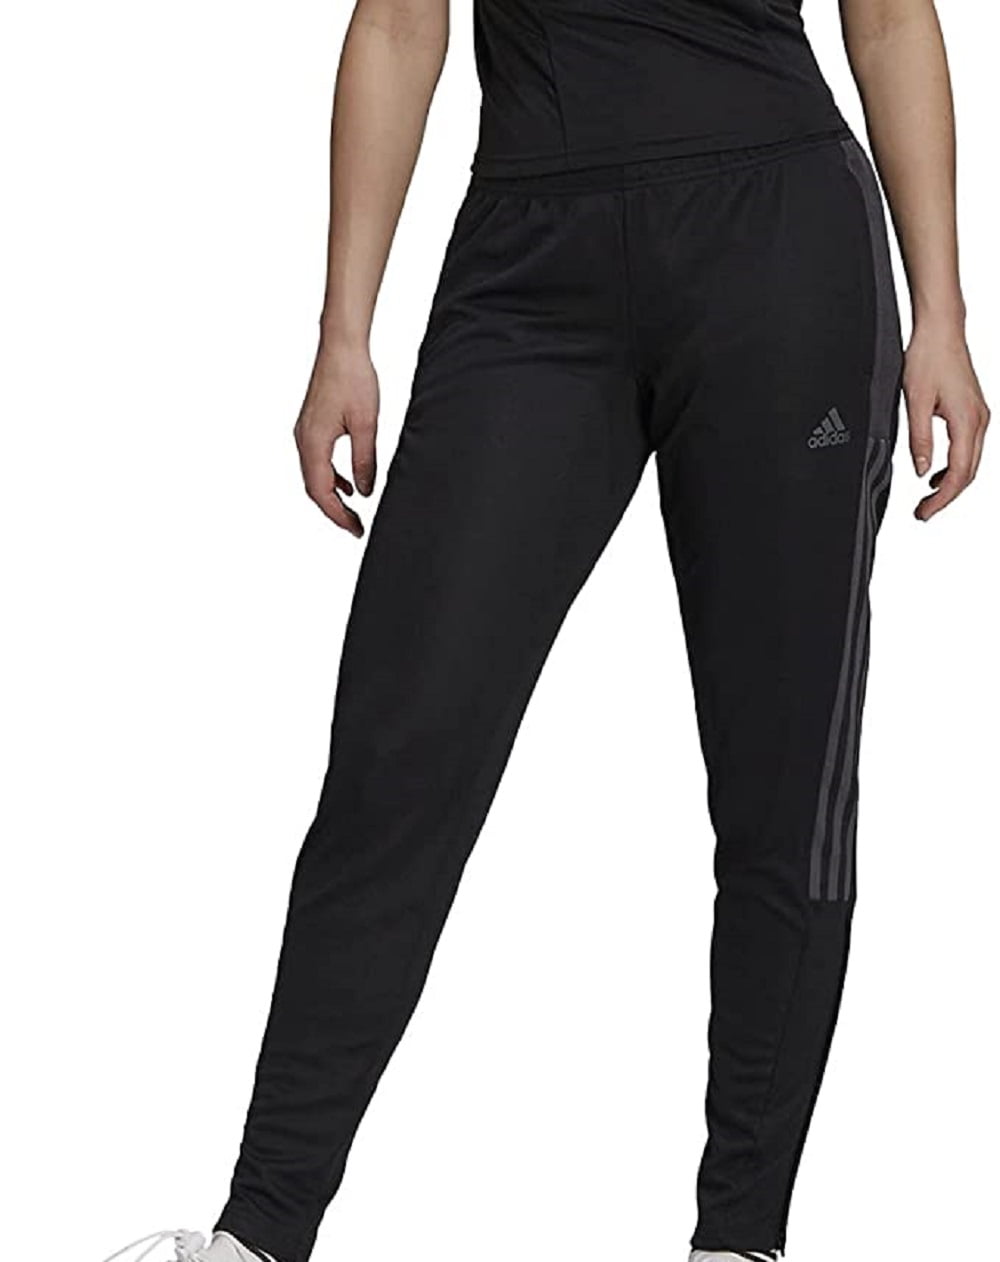 Samler blade Indstilling drag Adidas Women's Tiro Track Pants, Black/Dark Grey Heather, X-Small -  Walmart.com